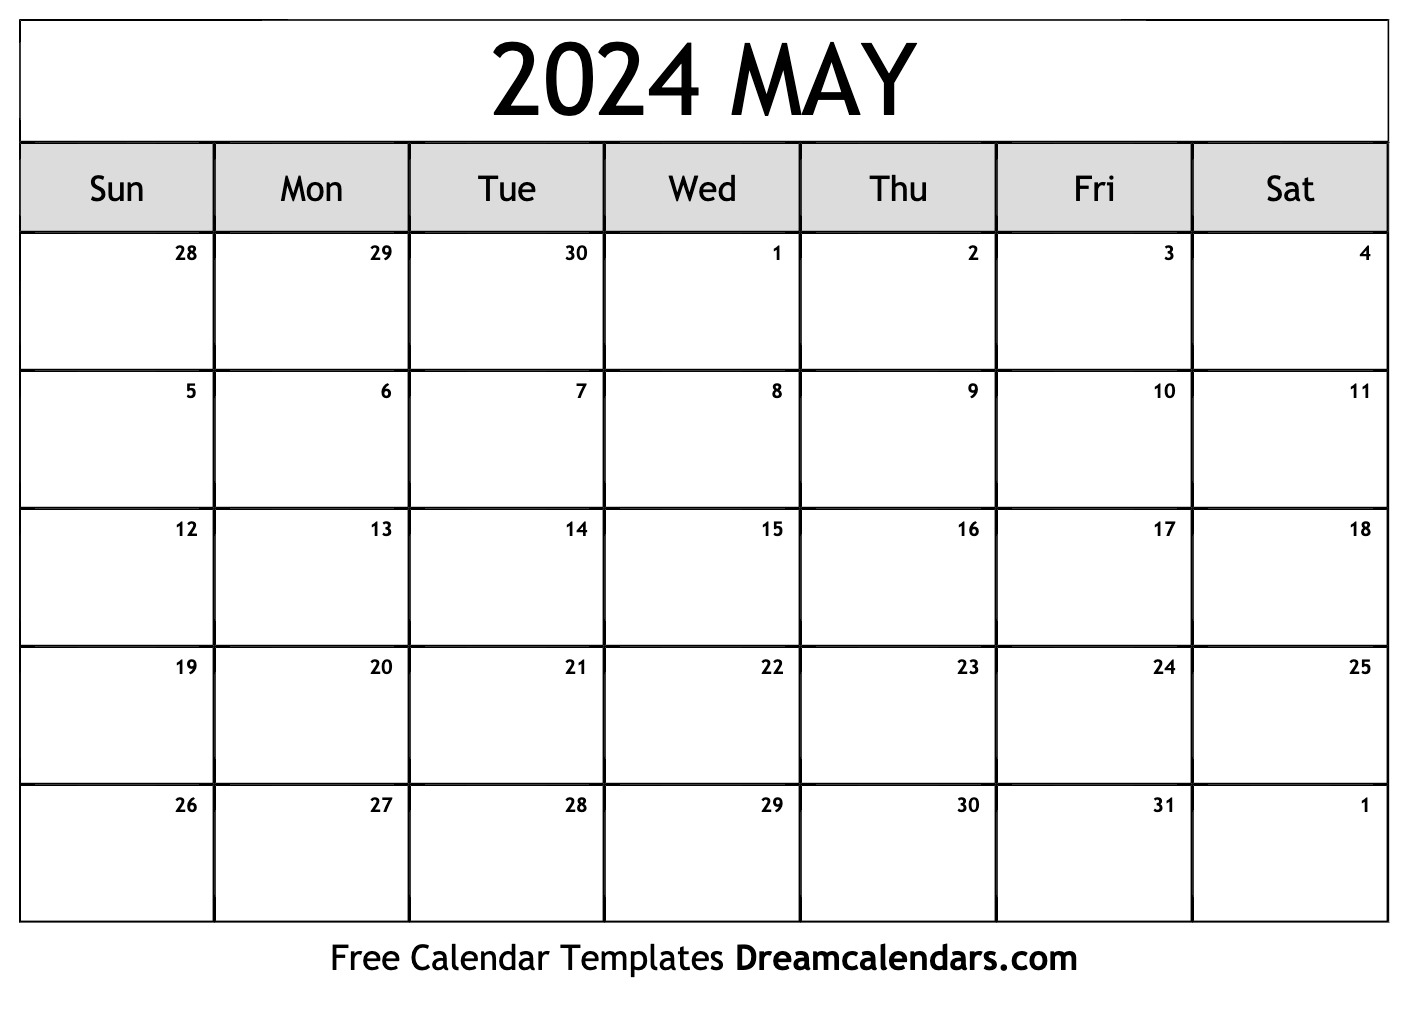 May 2024 Calendar | Free Blank Printable With Holidays for Calendar Printable 2024 May